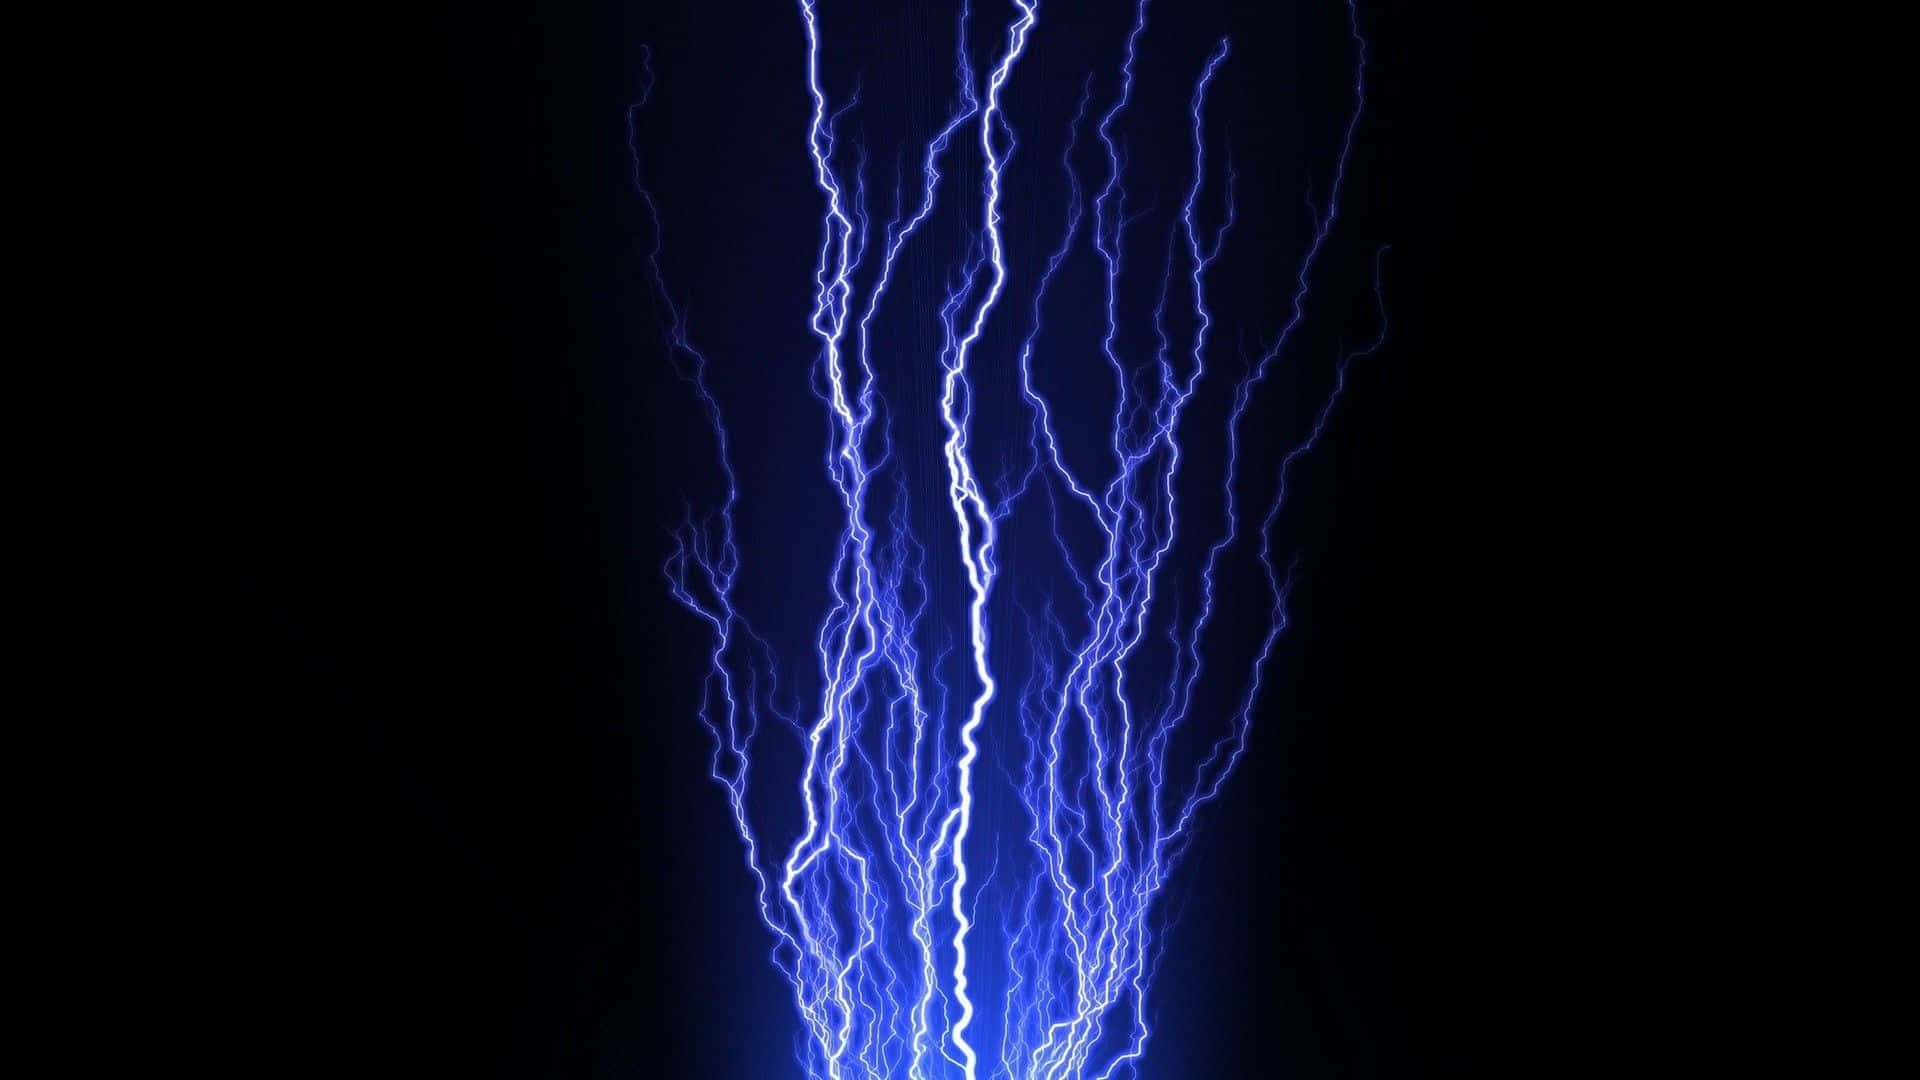 An Electric-blue Streak Of Lightning Pierces A Clear Night Sky